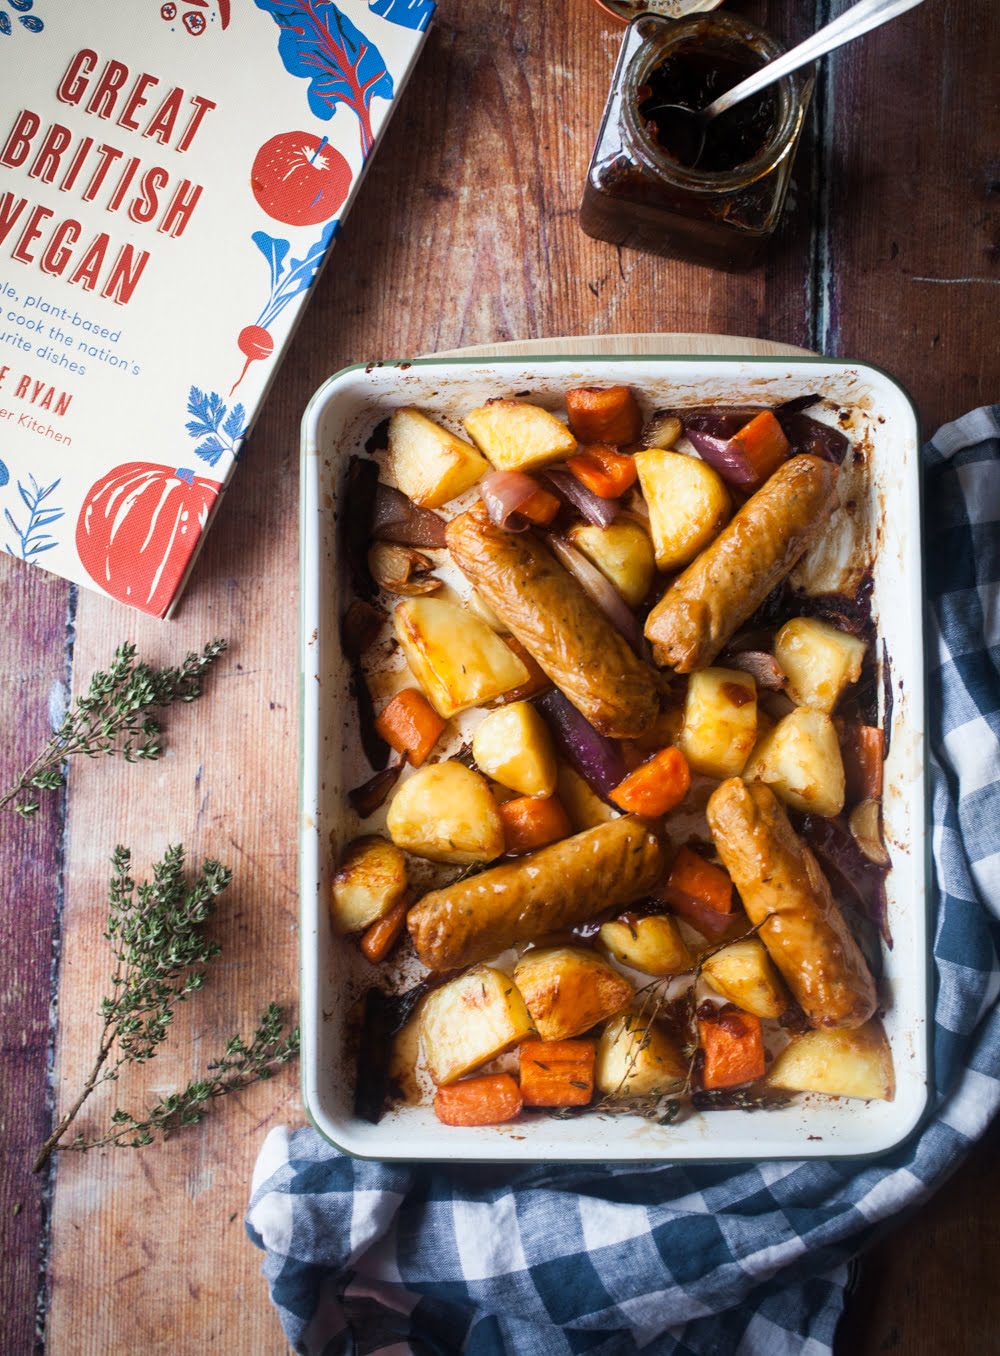 Sticky Sausage & Potato Traybake from Great British Vegan by Aimee Ryan